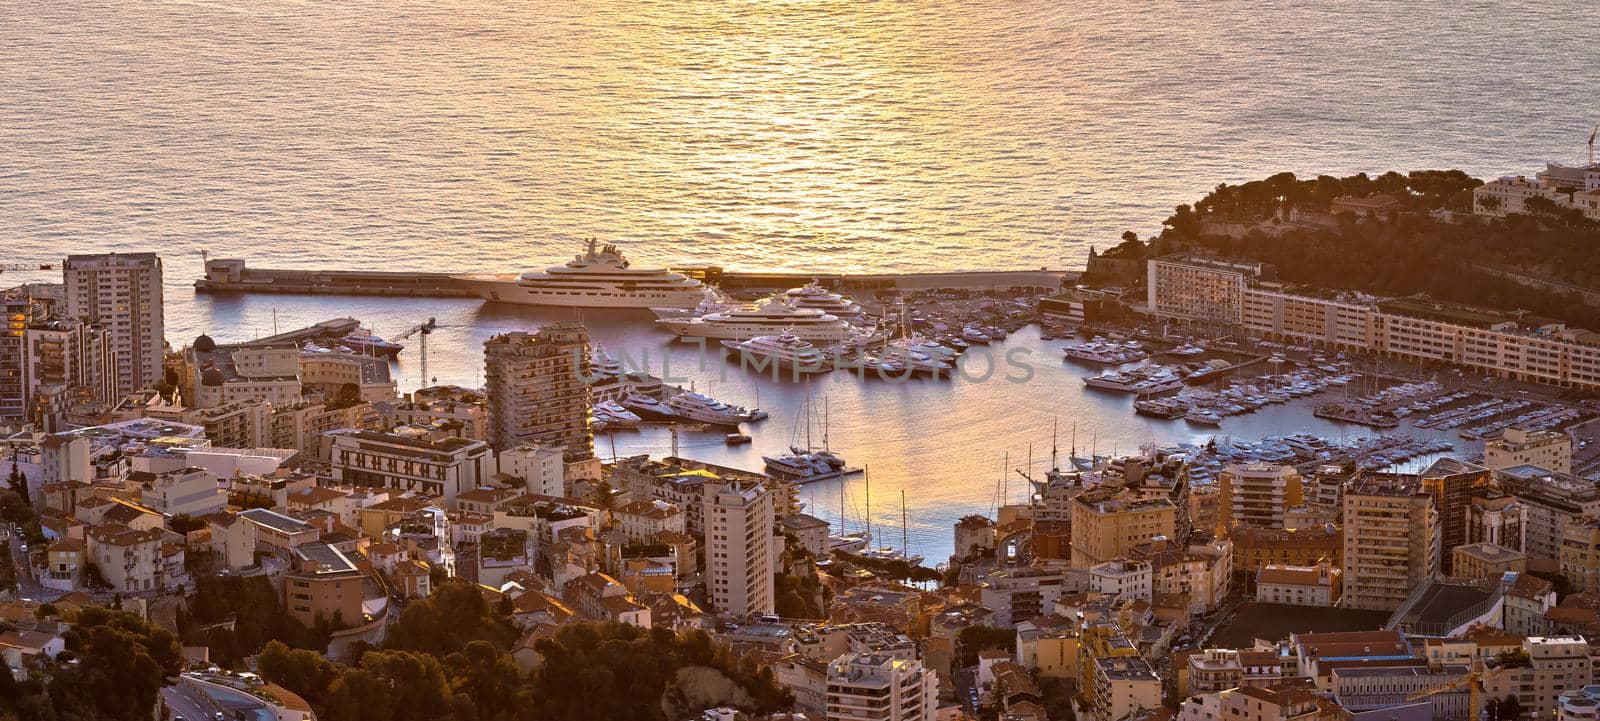 Monte Carlo luxury yacht harbor Port Hercules aerial sunrise view by xbrchx